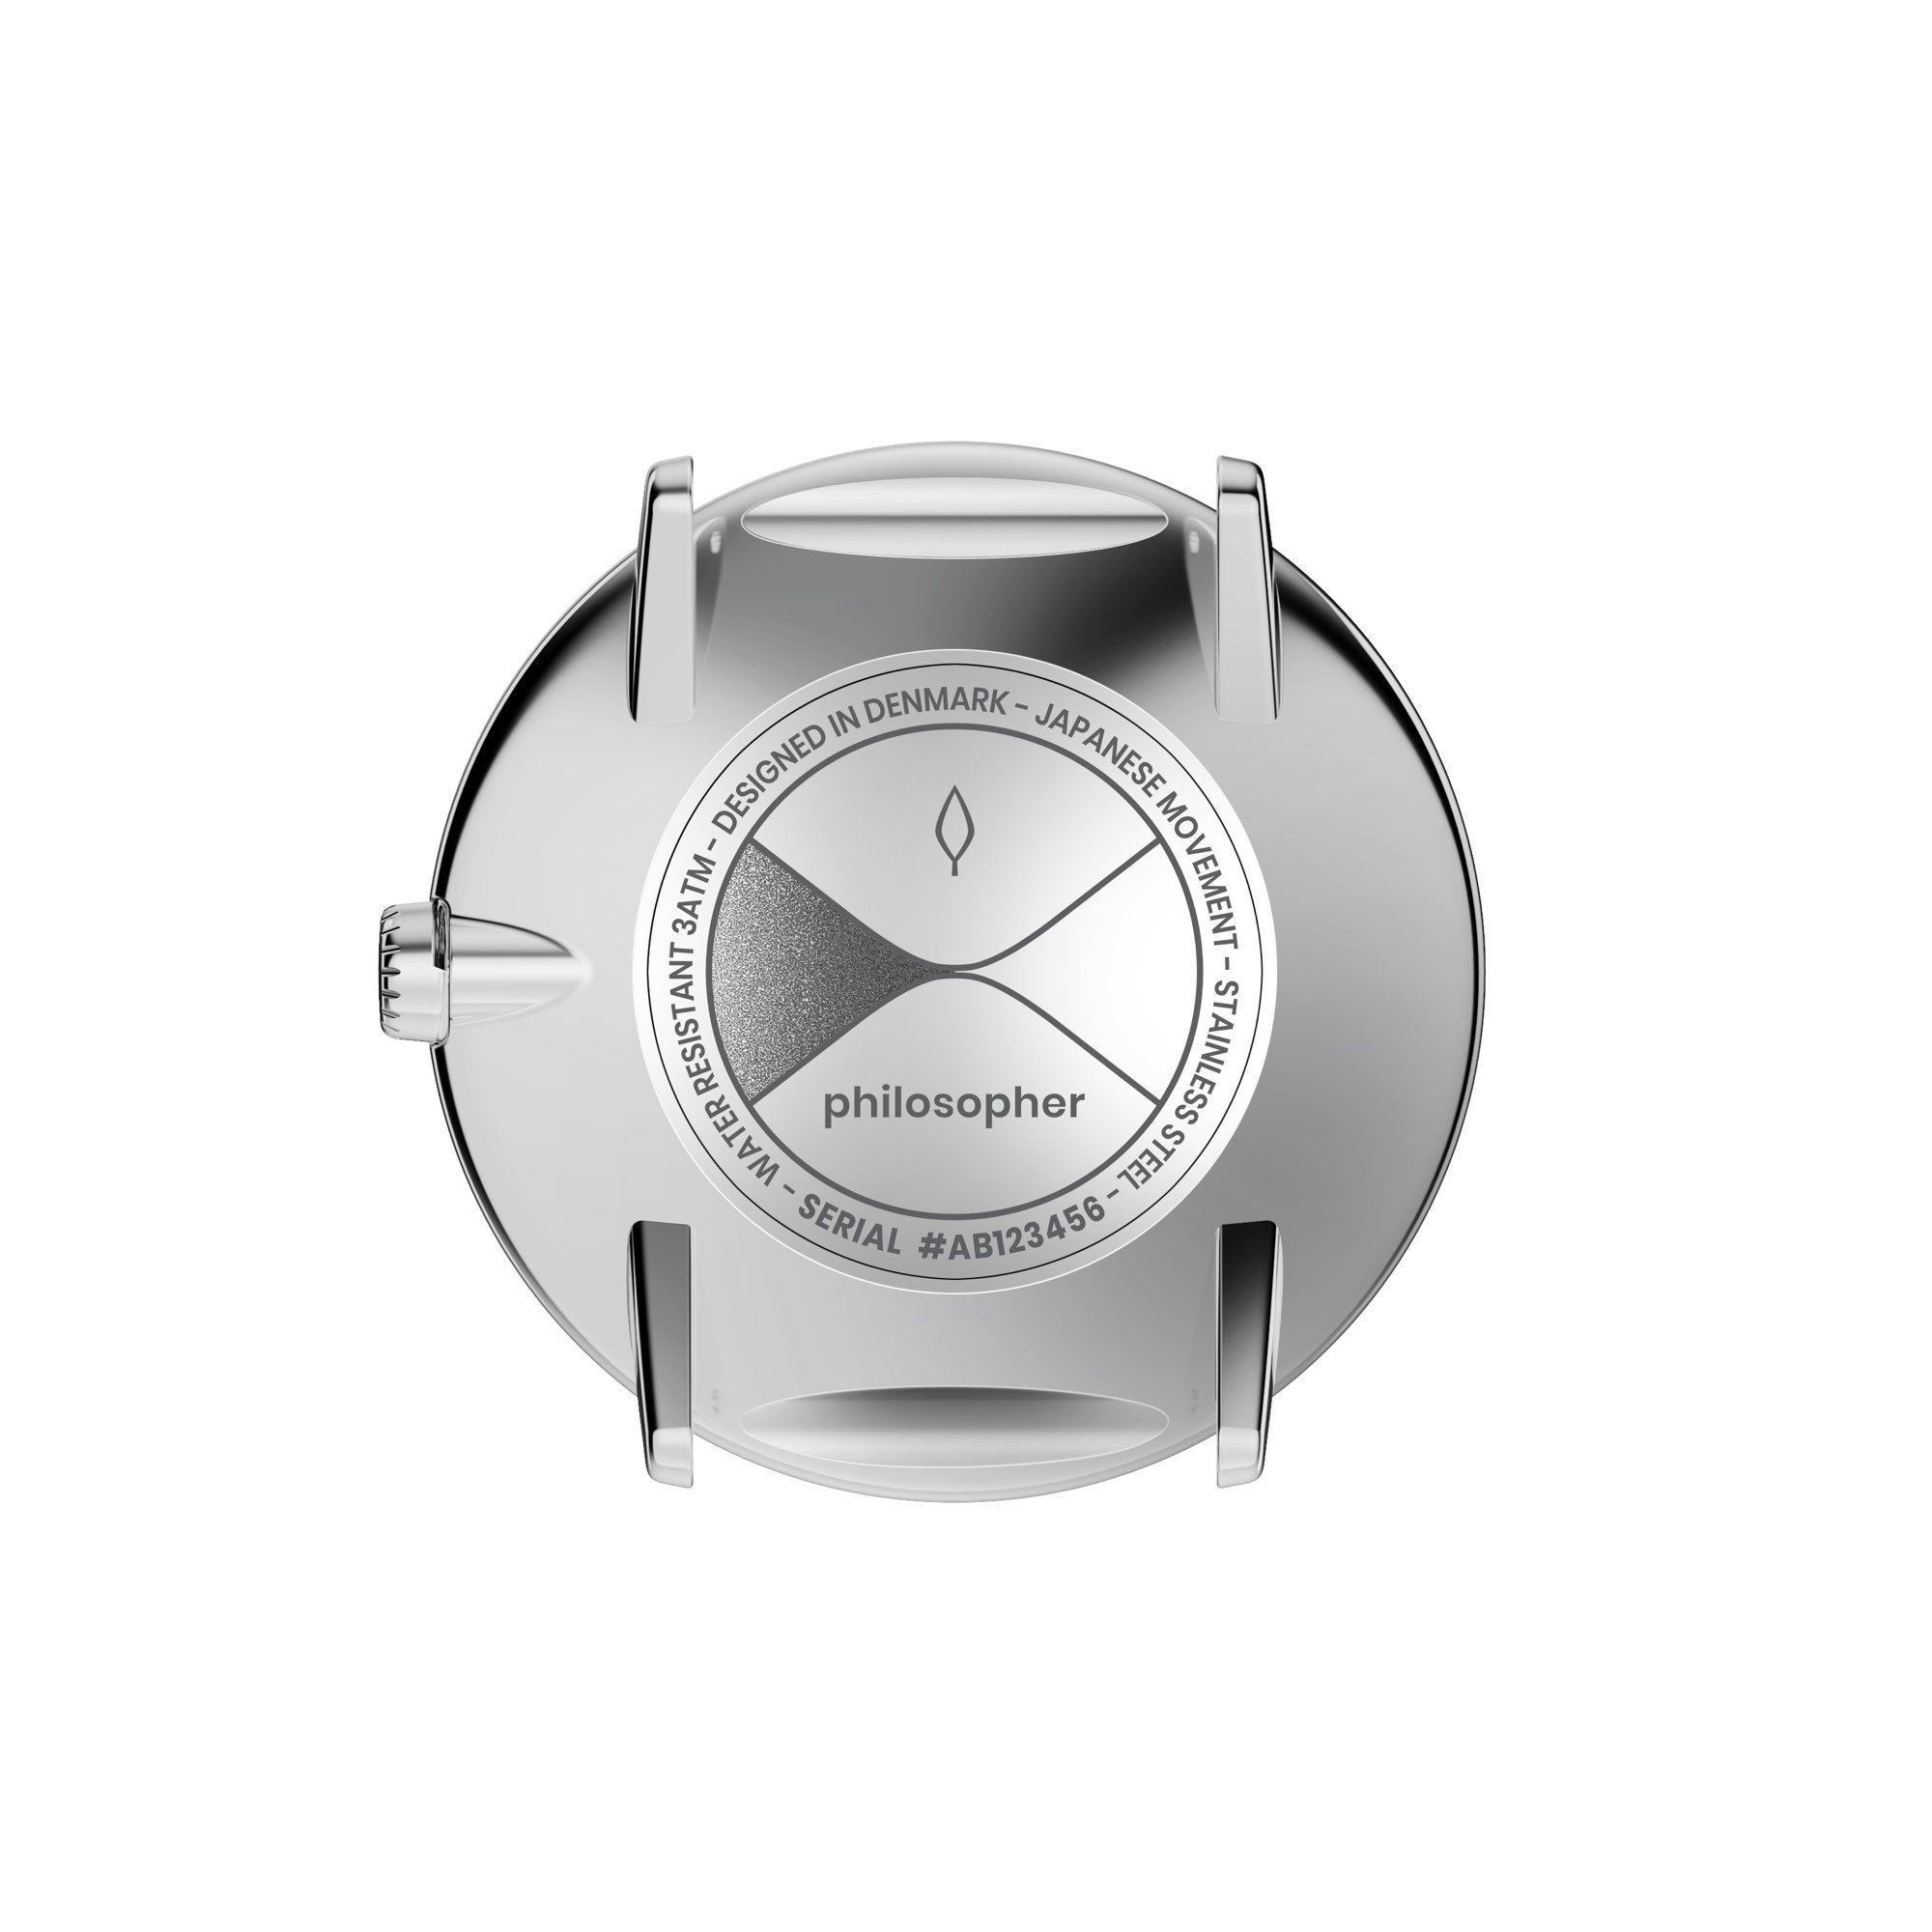 Nordgreen Philosopher Scandinavian Silver Watch with Interchangeable Straps